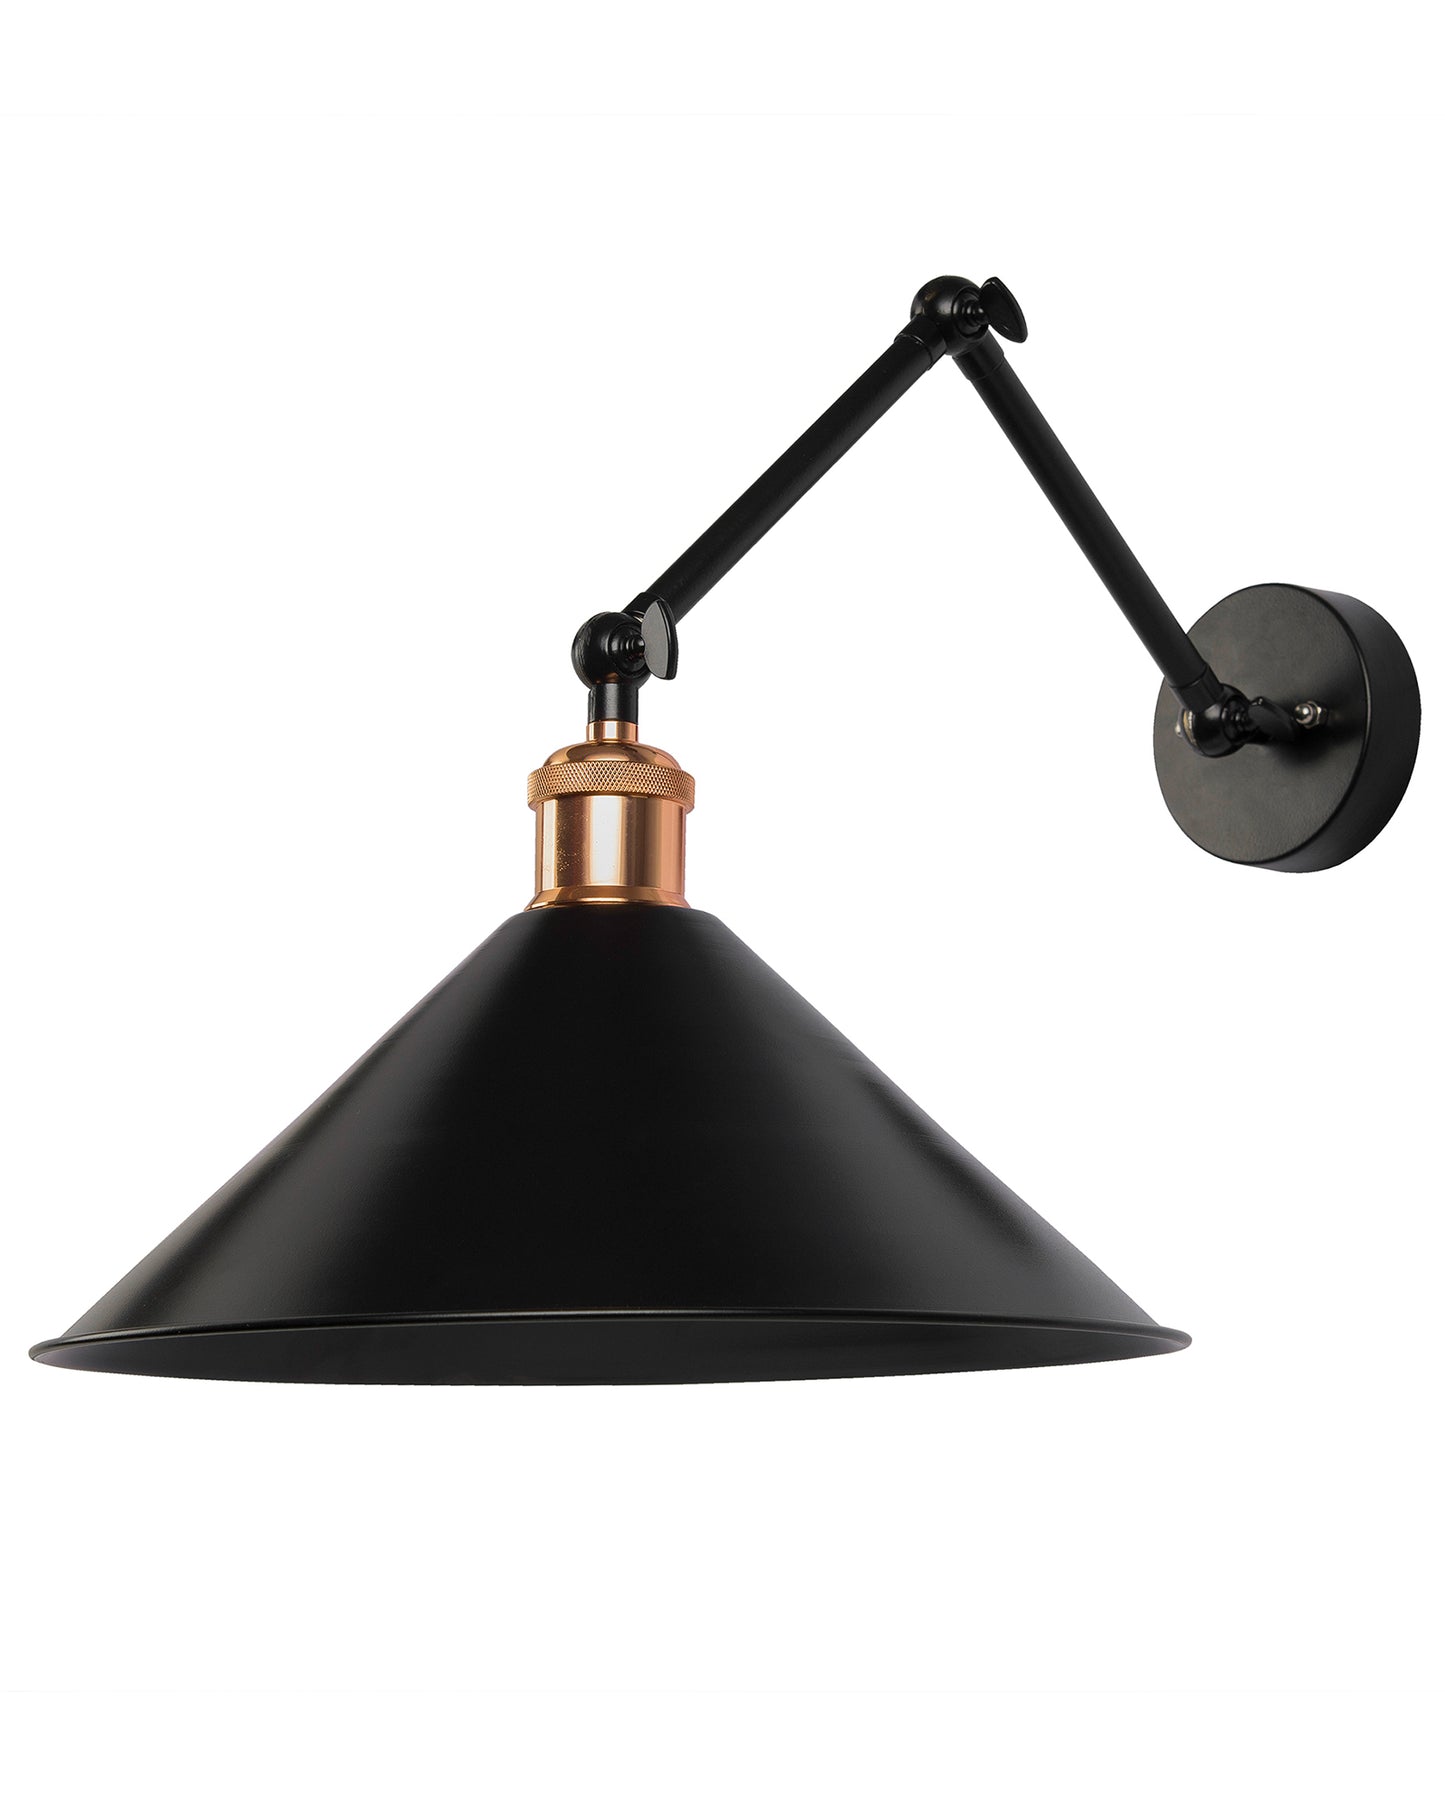 Edison Black 360 Barn Cone Shade Wall Lamp, Vintage Industrial Loft, E27 Holder, Decorative, Swing Wall Light, Triple movement